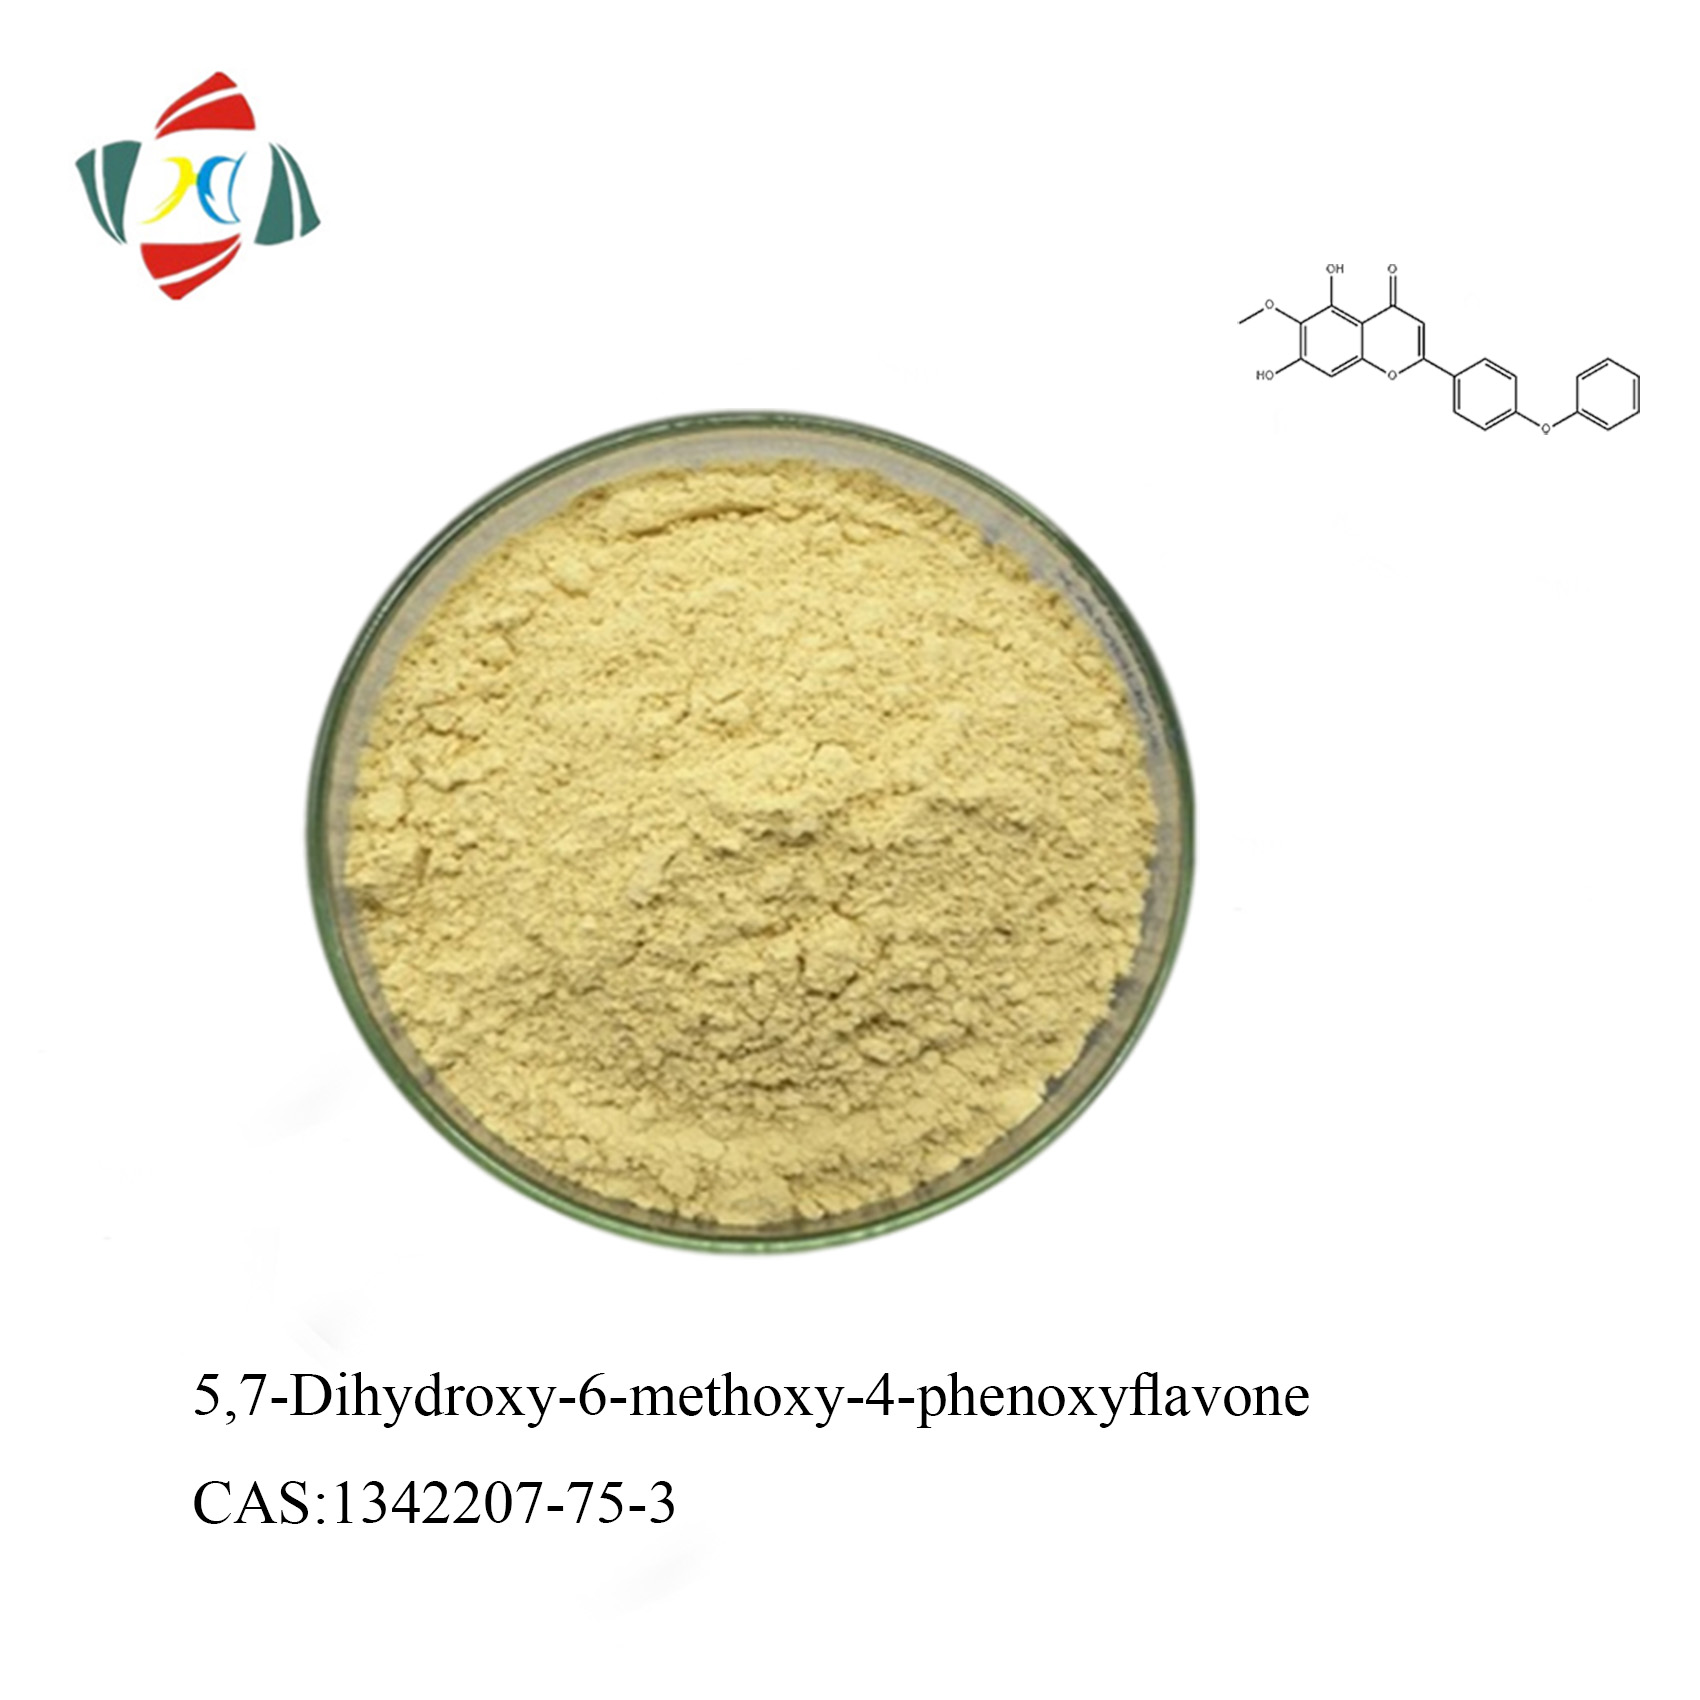 5,7-Dihydroxy-6-methoxy-4-phenoxyflavon CAS 1342207-75-3